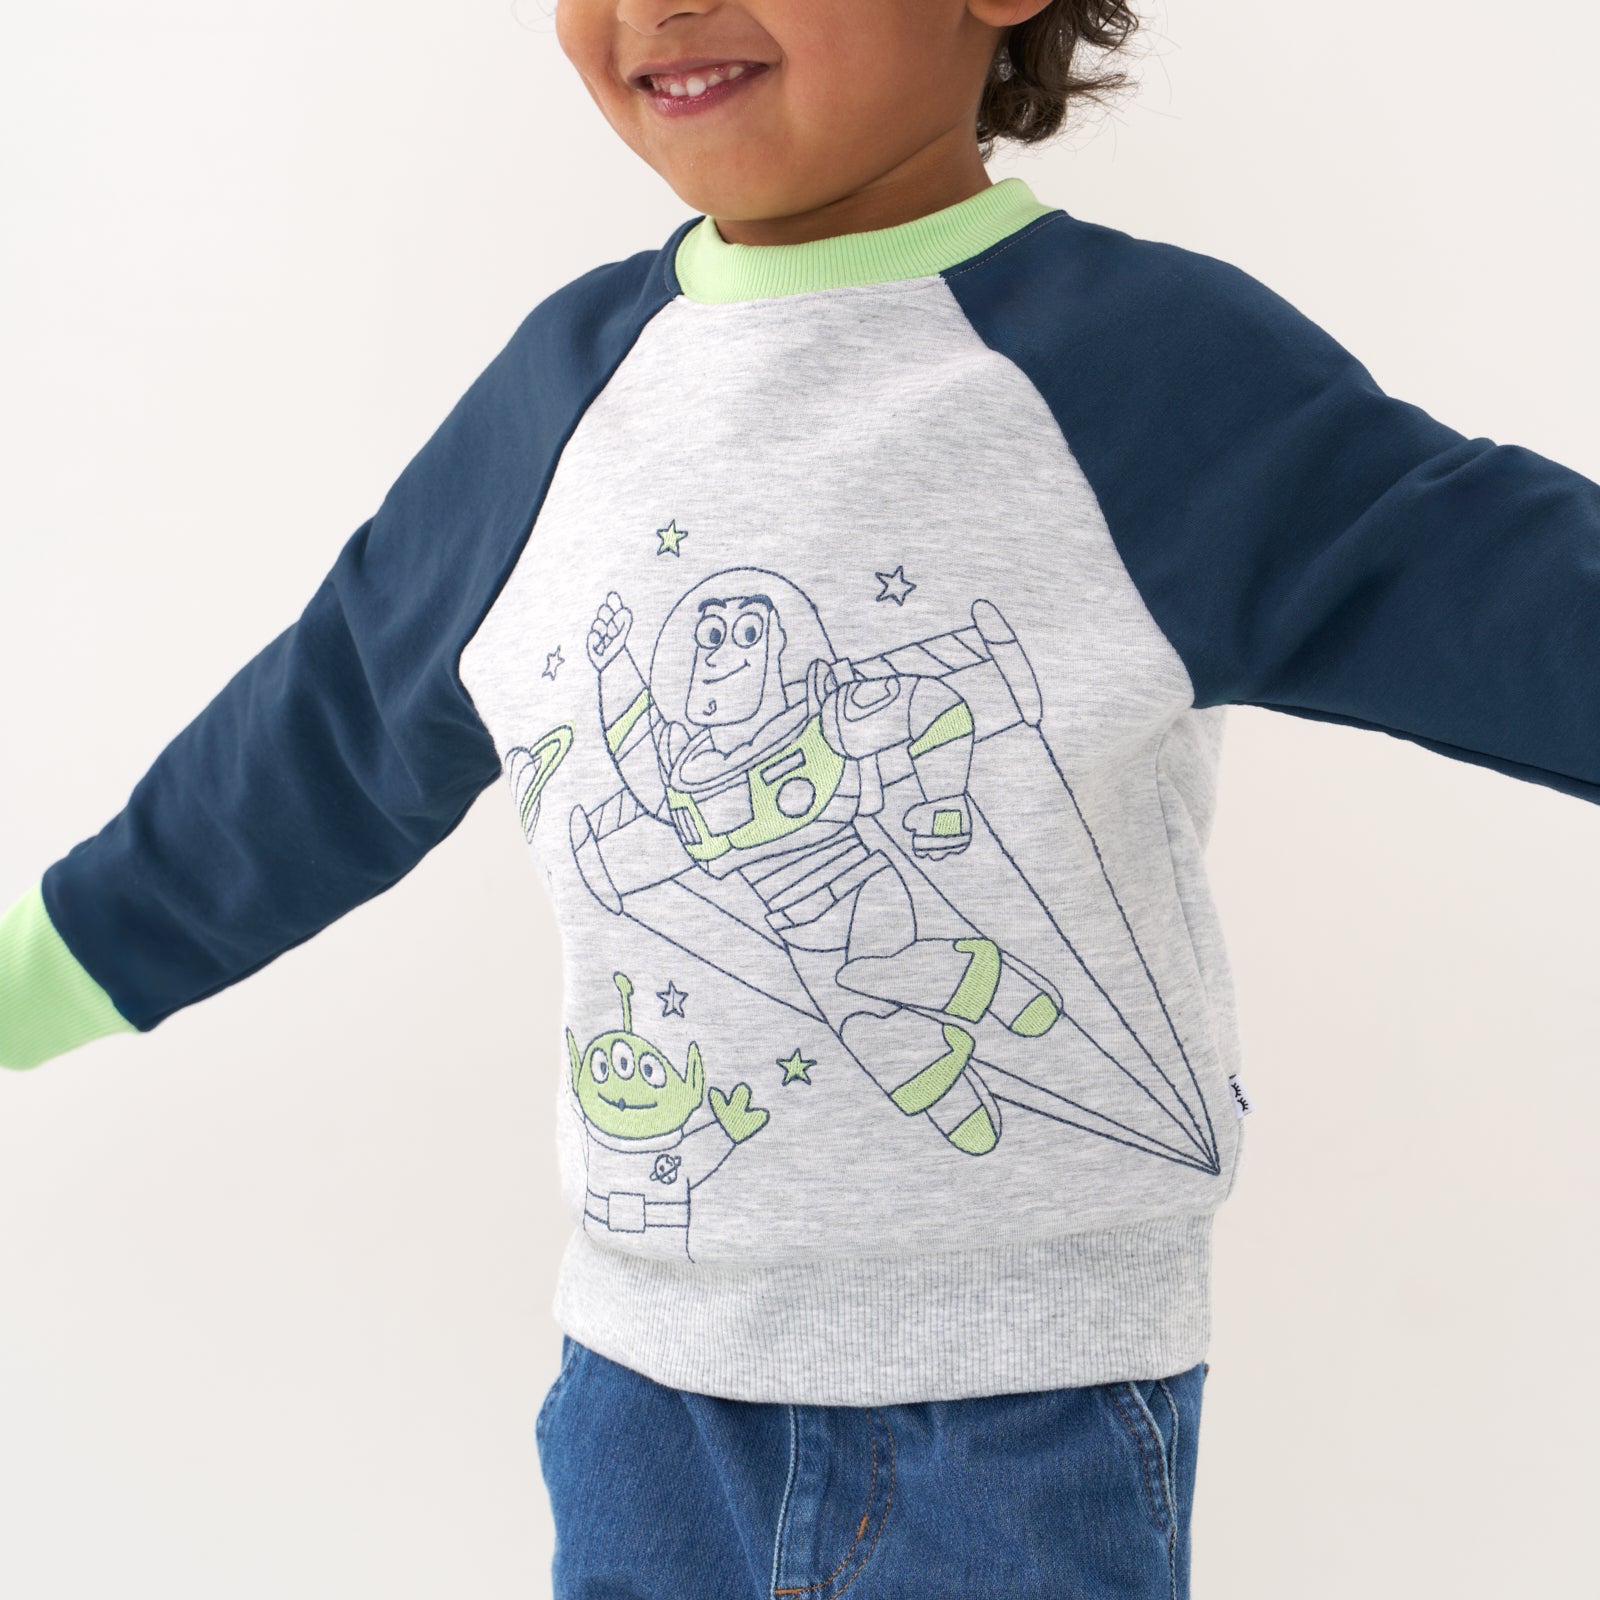 Close up image of a child wearing a Disney Pixar Buzz Lightyear crewneck sweatshirt